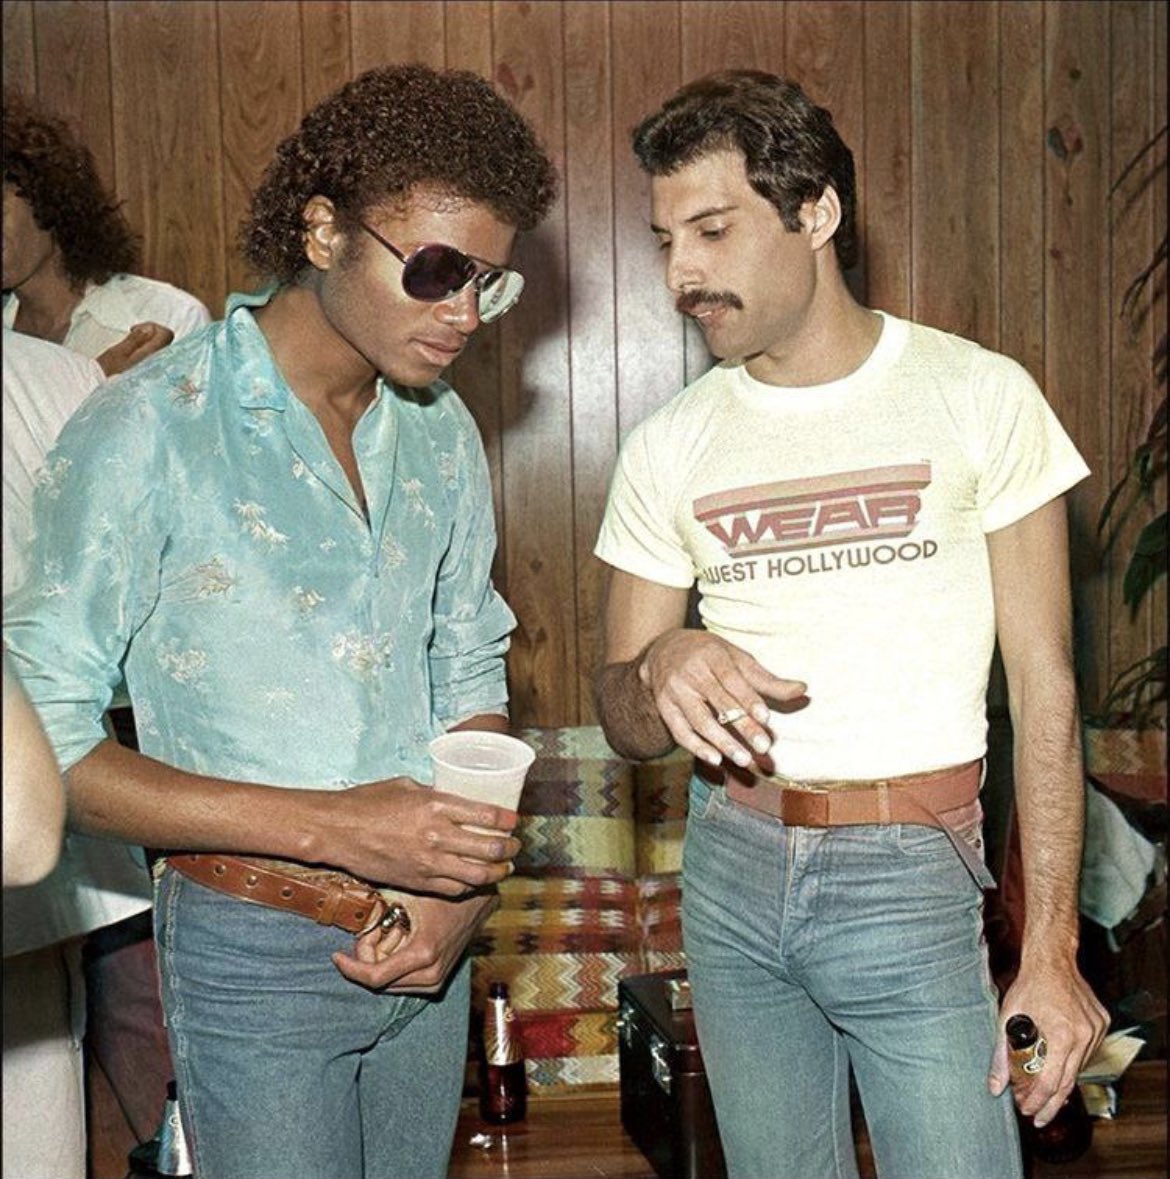 Michael Jackson & Freddie Mercury, early 1980s.